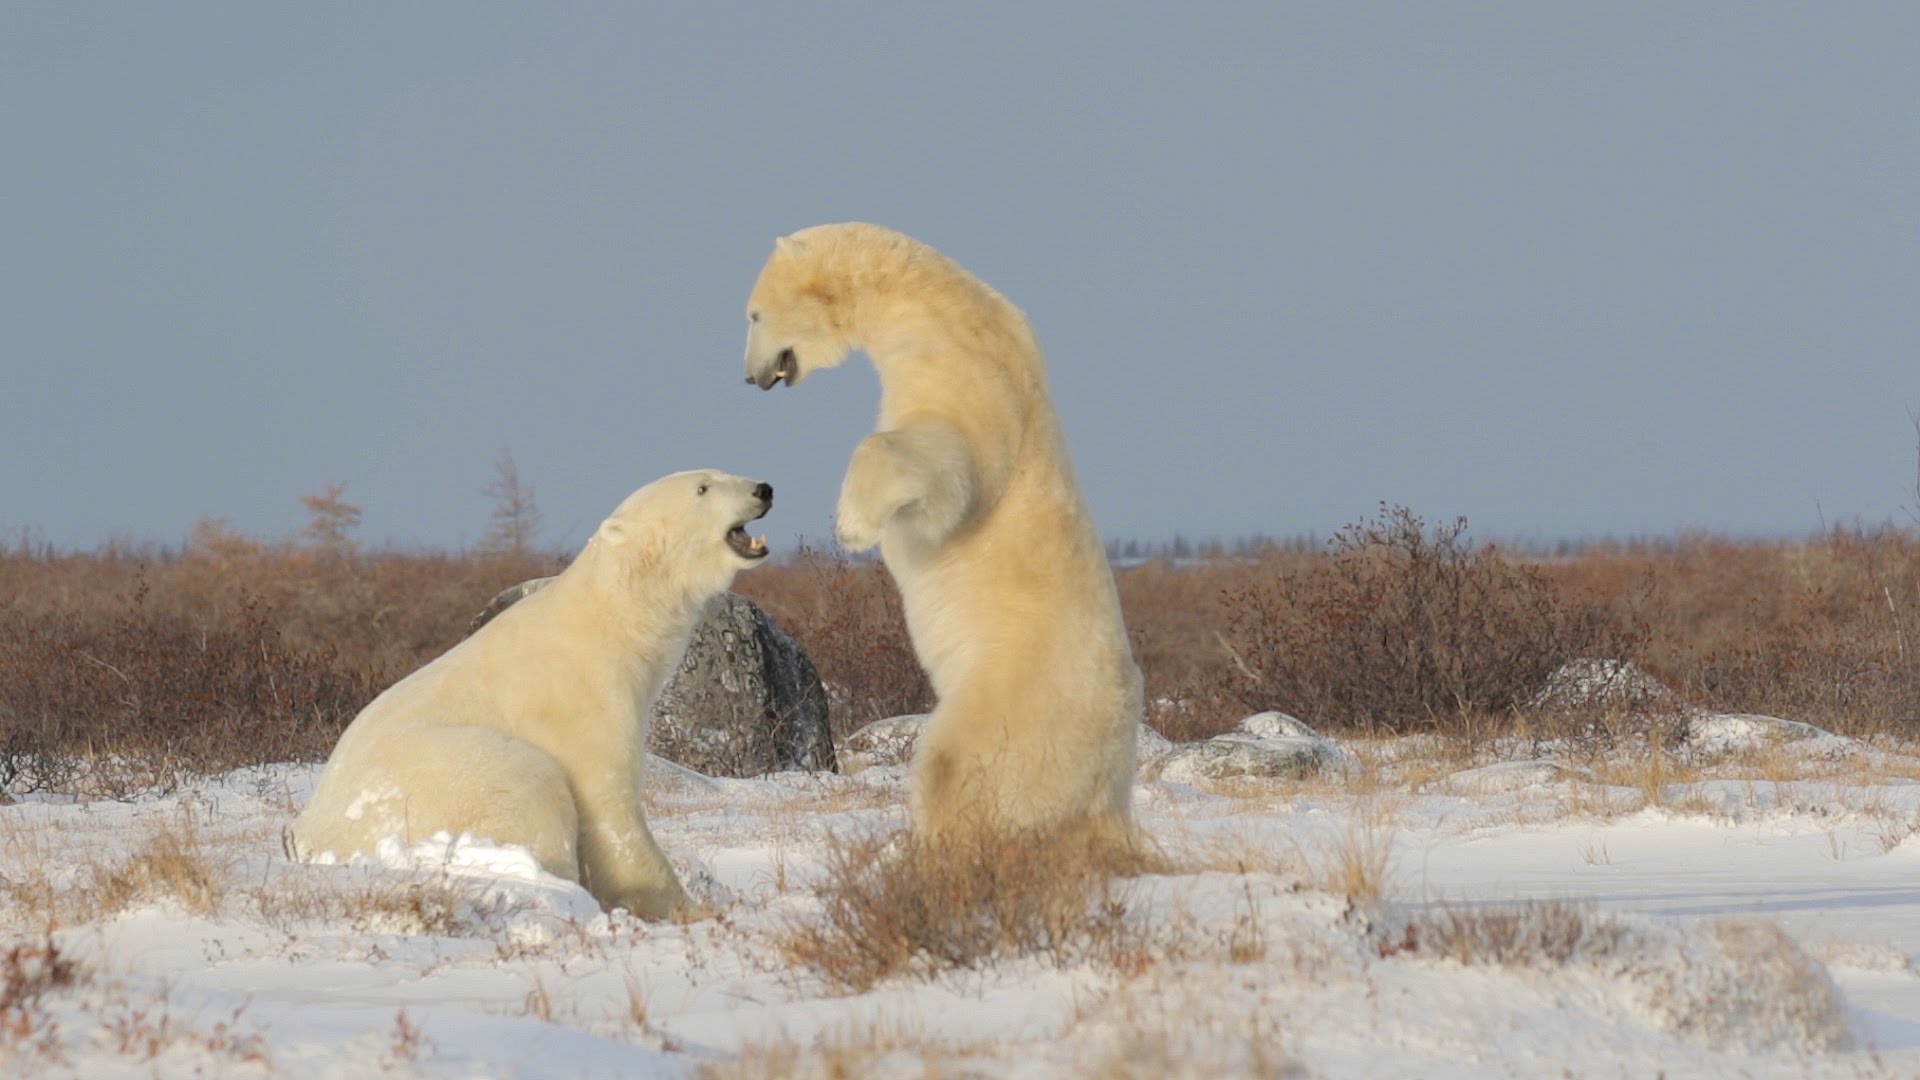 Giant Polar Bears wrestling דובי קוטב ענקיים בהאבקות - YouTube